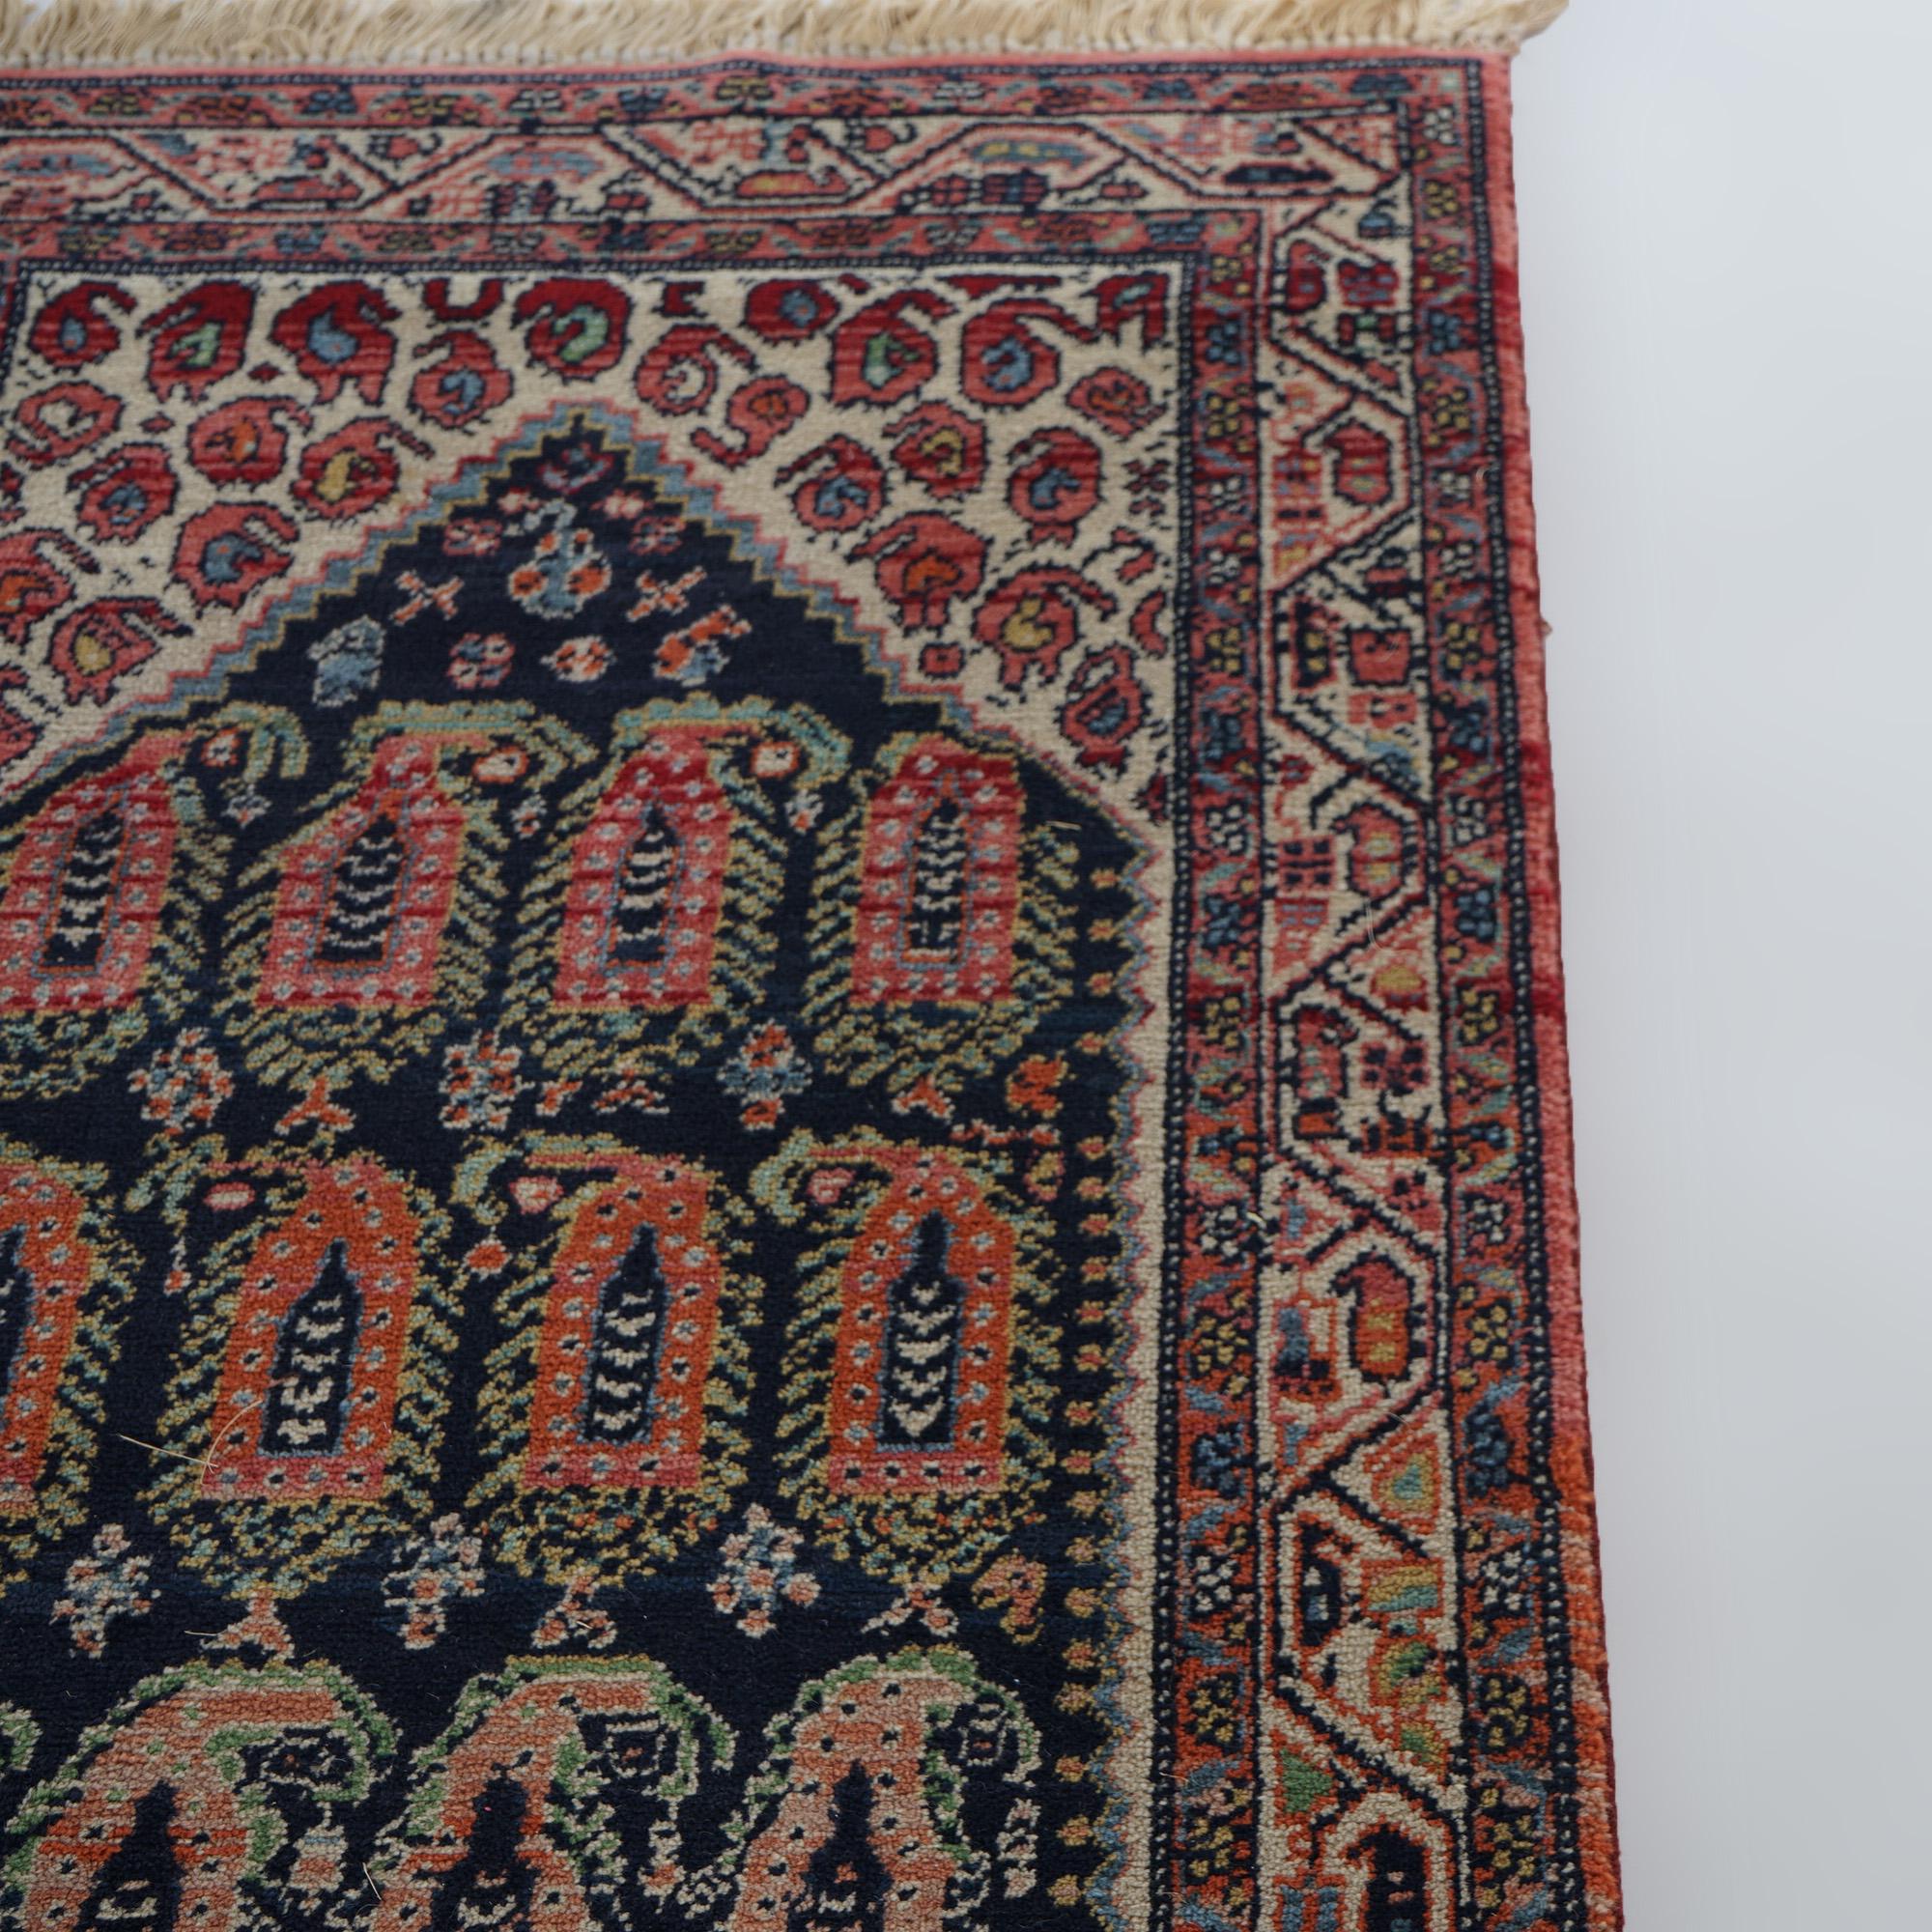 Wool Antique Kadjar Karastan Oriental 3x12 Rug Runner with Boteh Design C1930